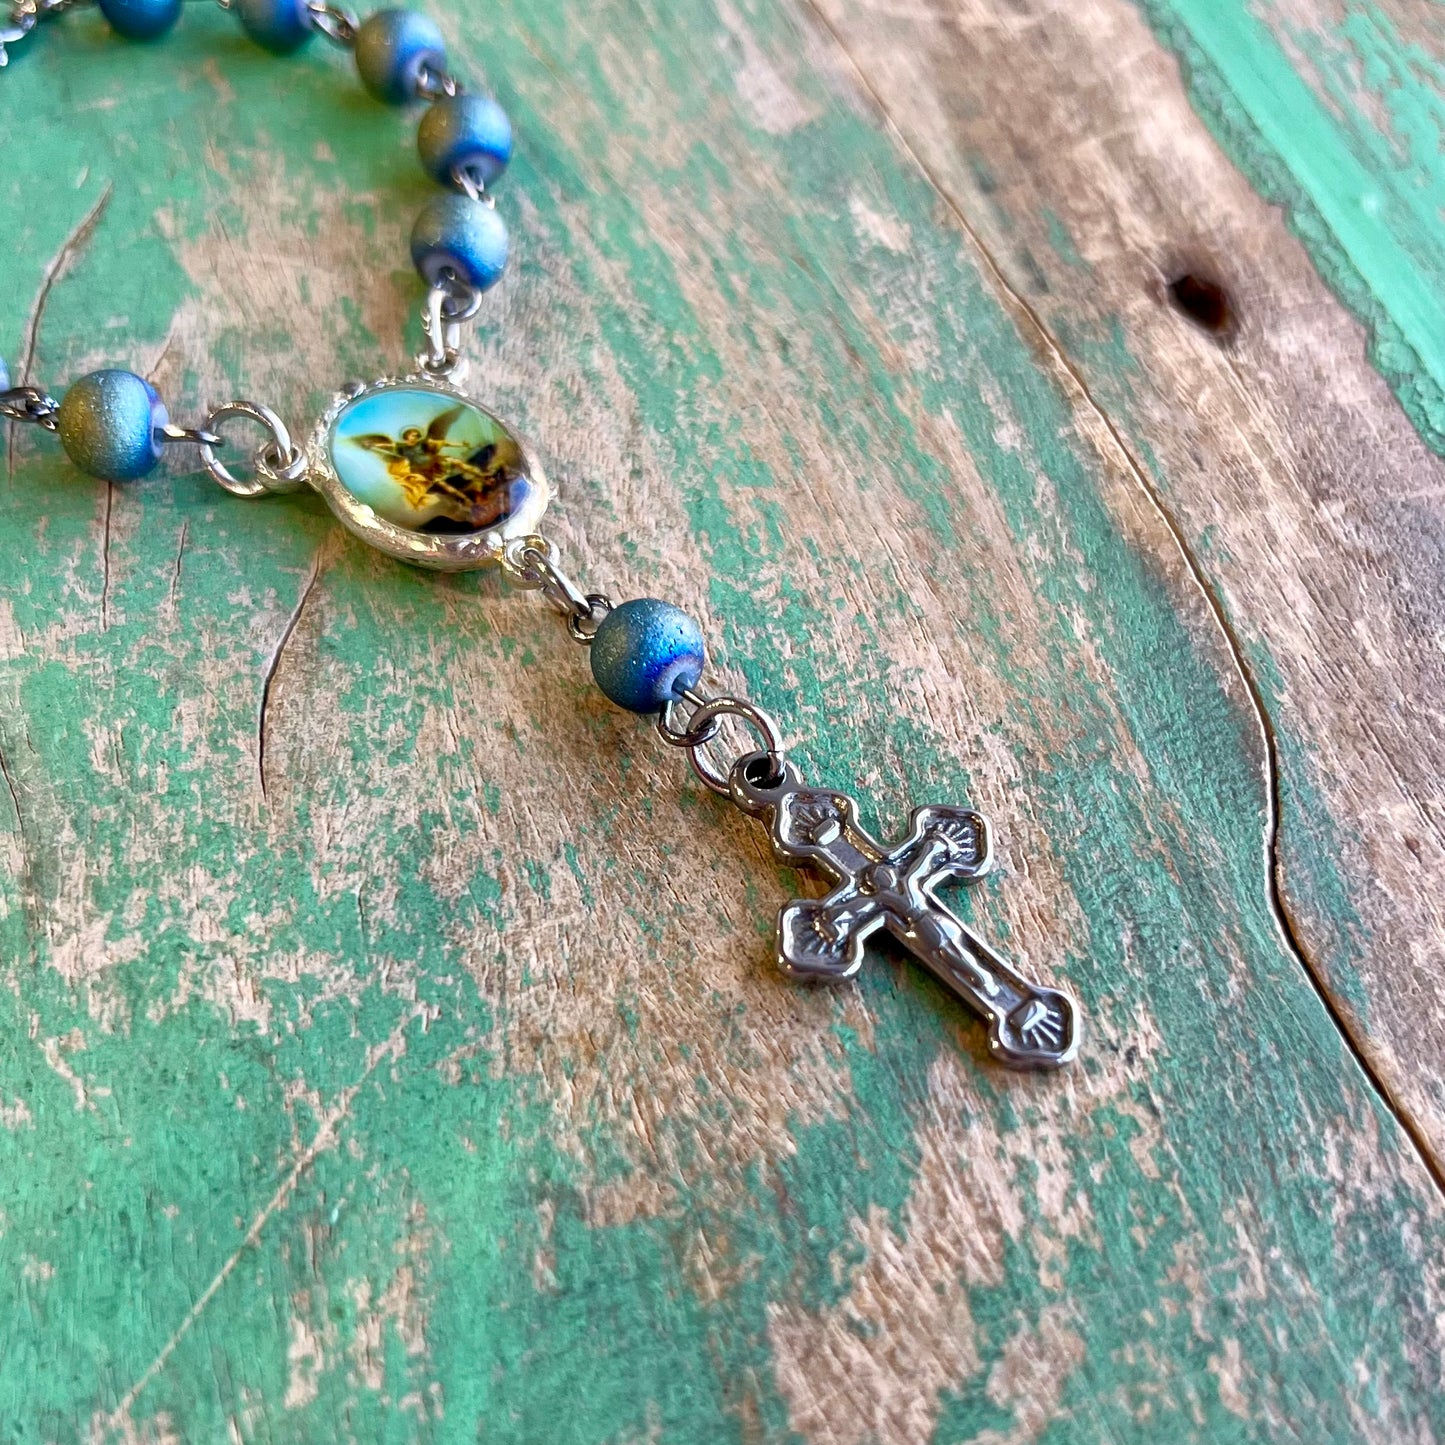 St Michael Decade Rosary